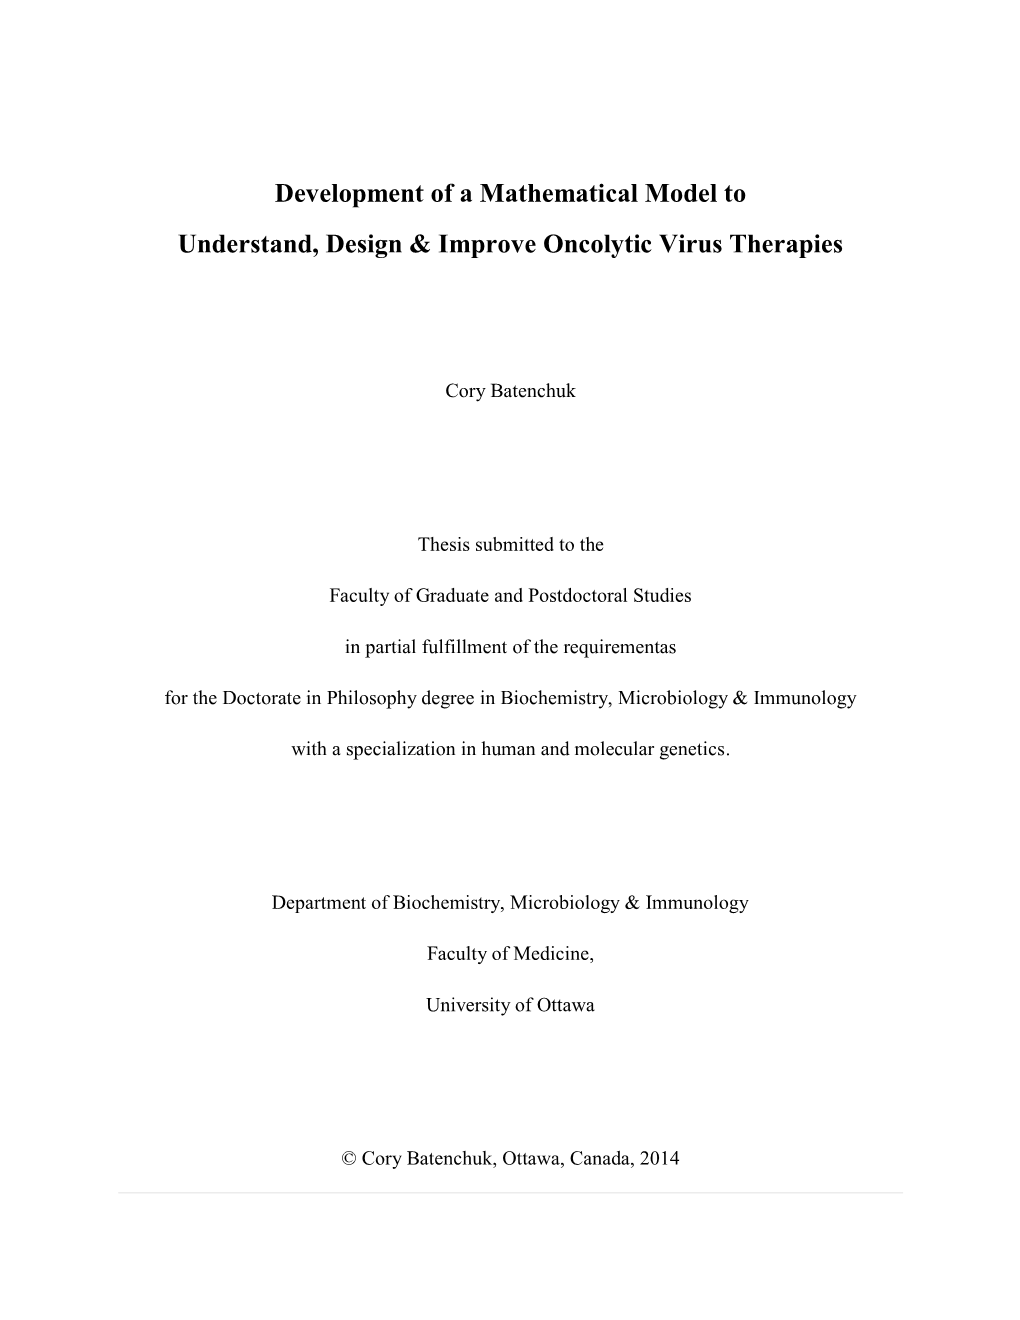 Development of a Mathematical Model to Understand, Design & Improve